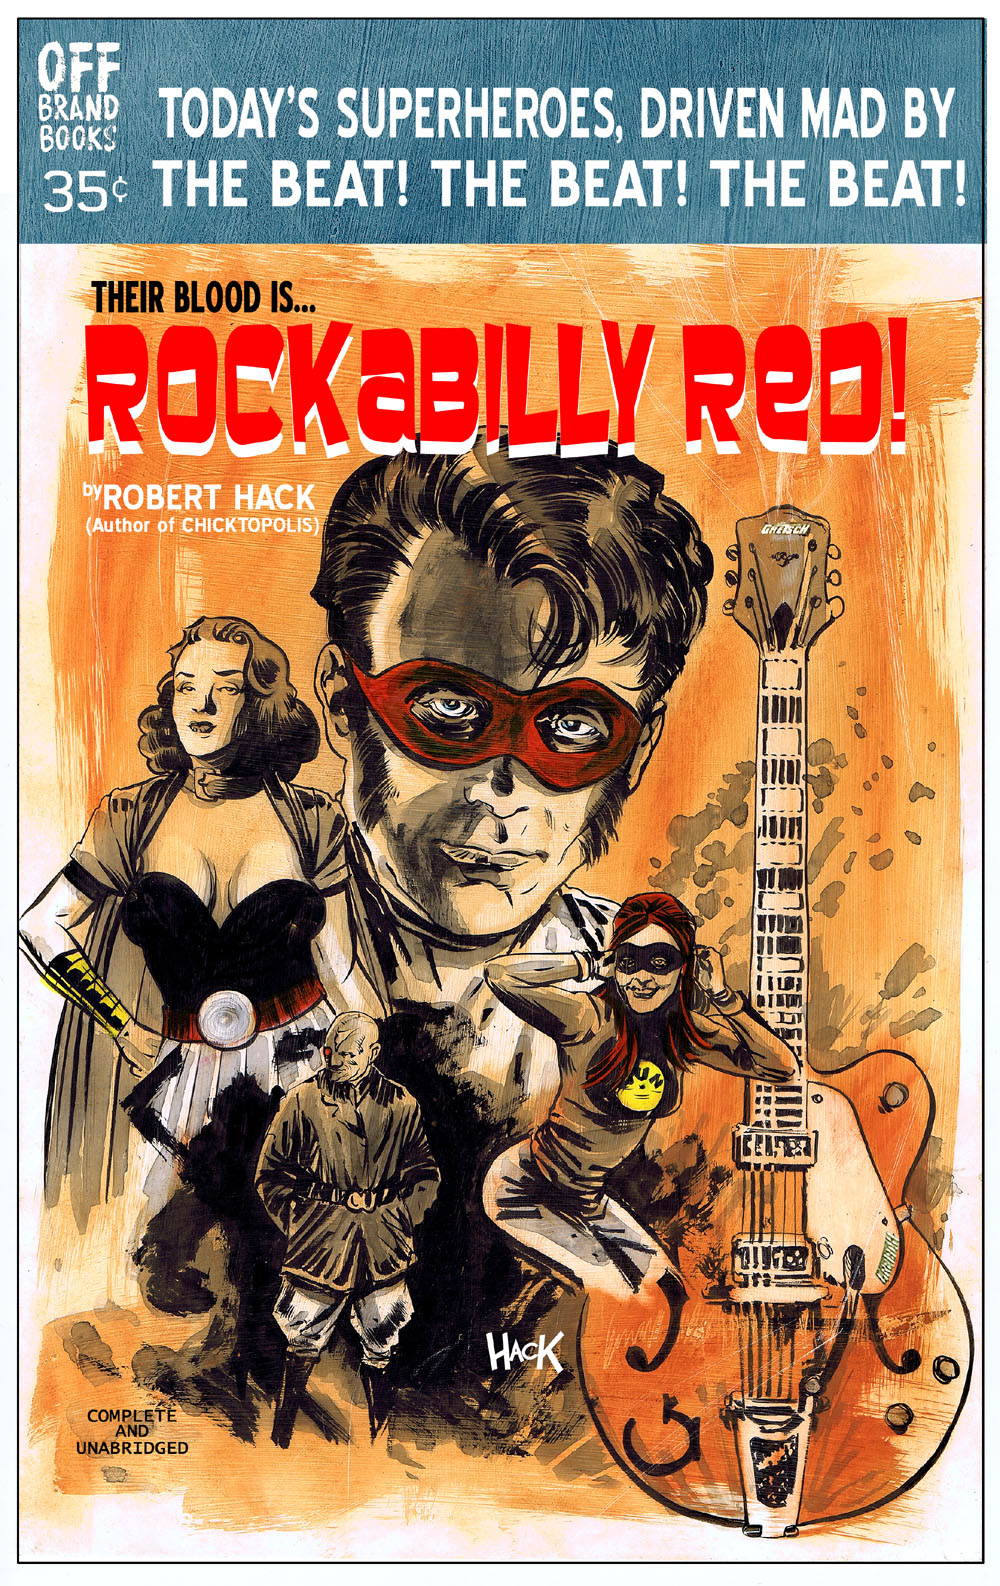 Rockabilly Red!